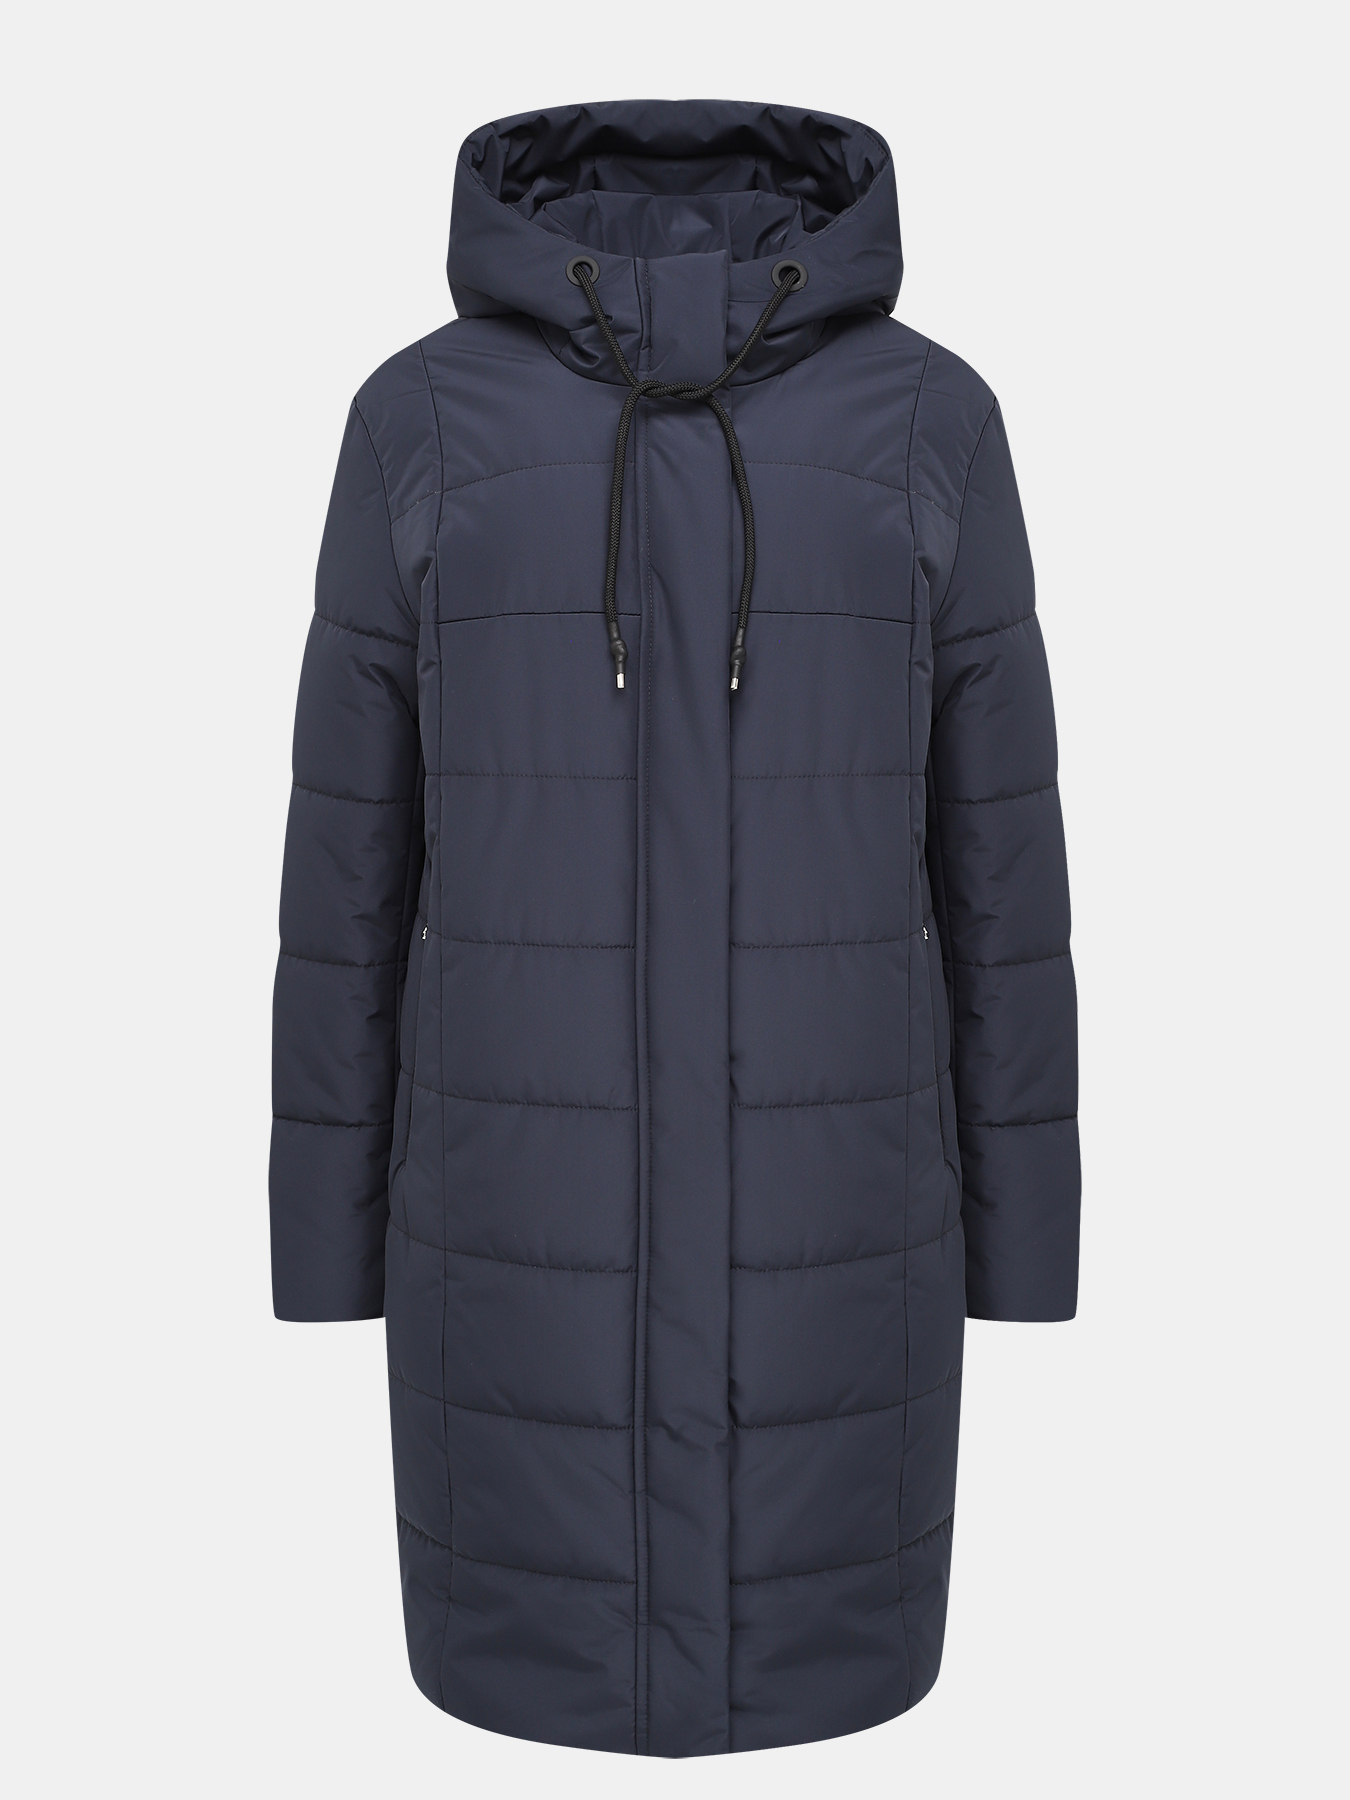 Пальто зимнее Maritta 433548-021, цвет темно-синий, размер 46